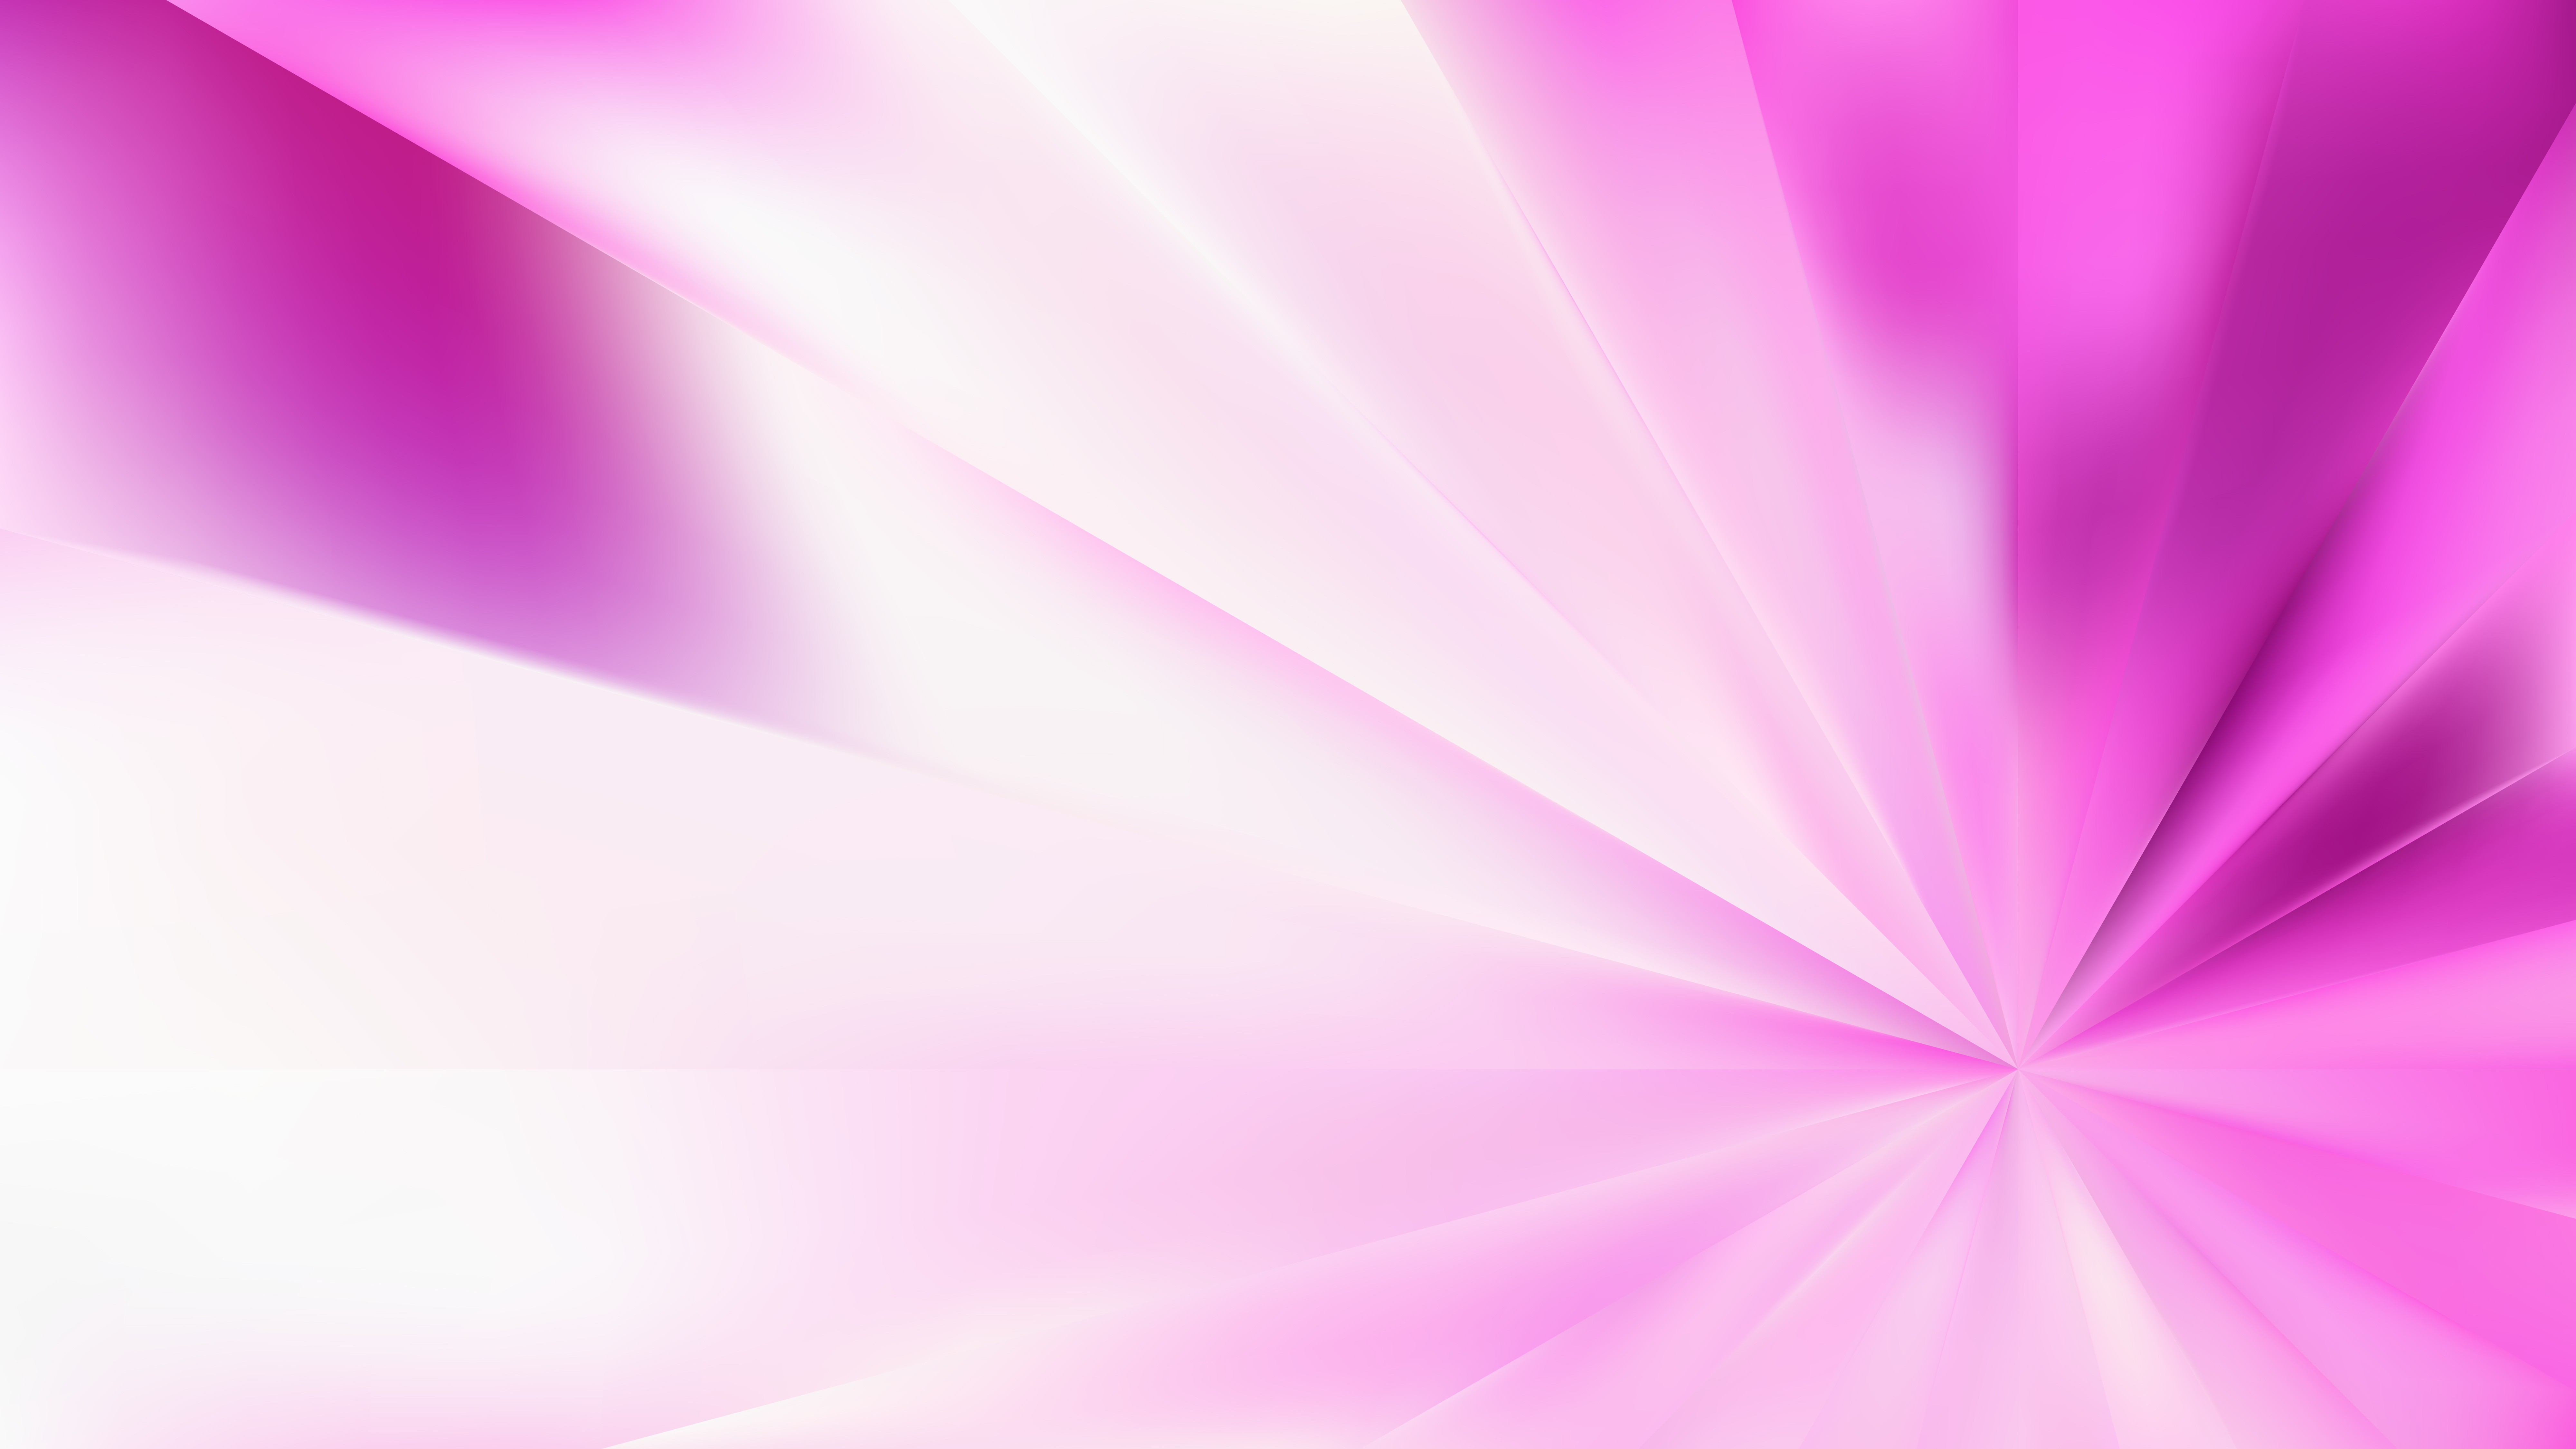 Abstract Light Purple Background Design